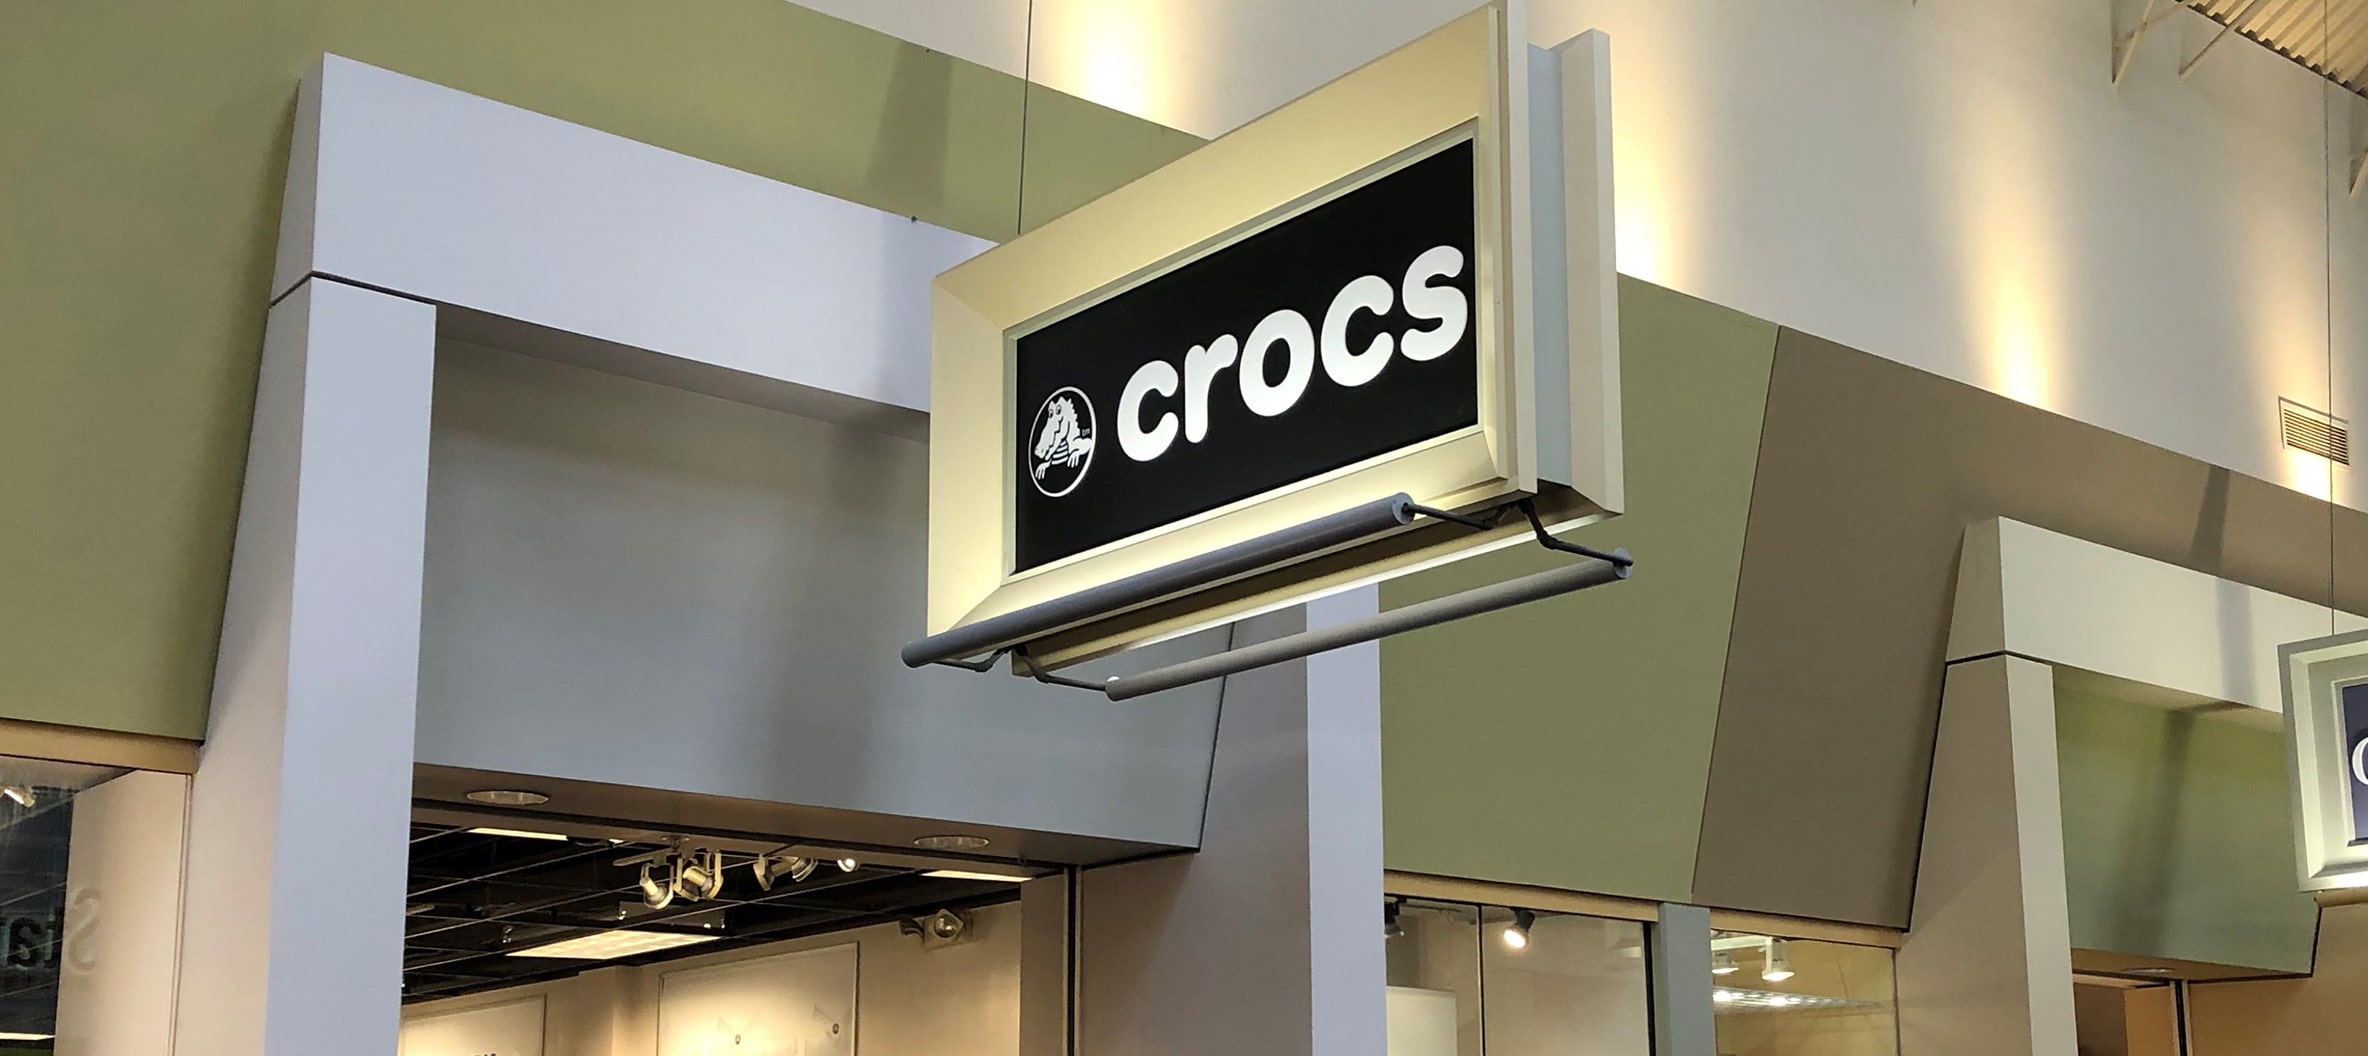 crocs store near me now